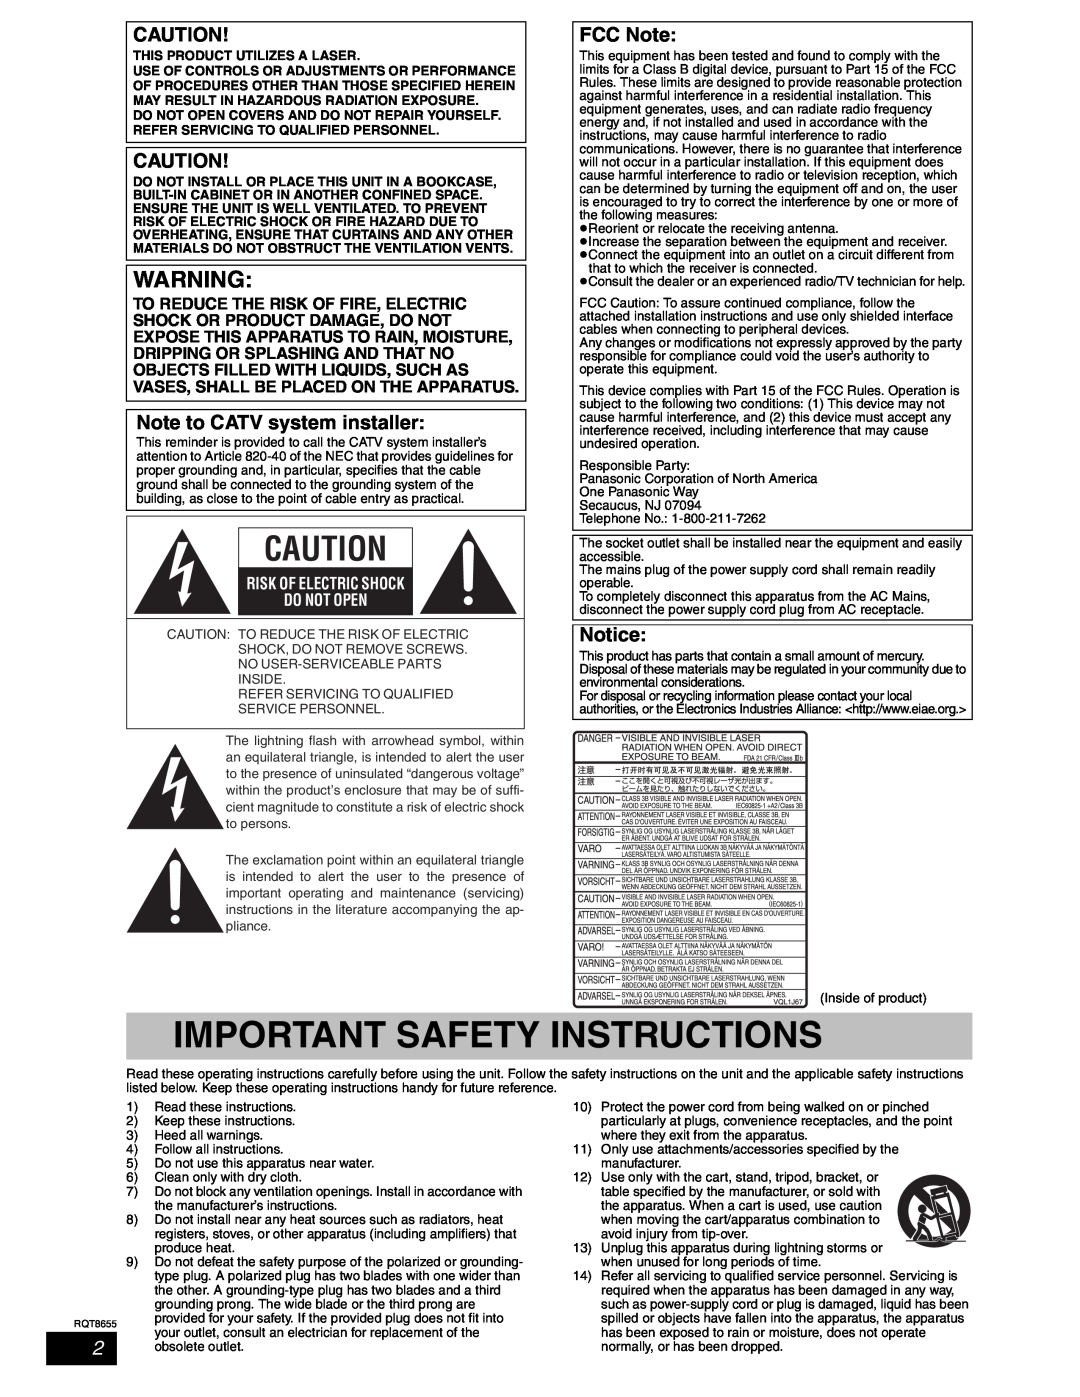 Panasonic SC-RT50 warranty Important Safety Instructions, Note to CATV system installer, FCC Note, Notice 